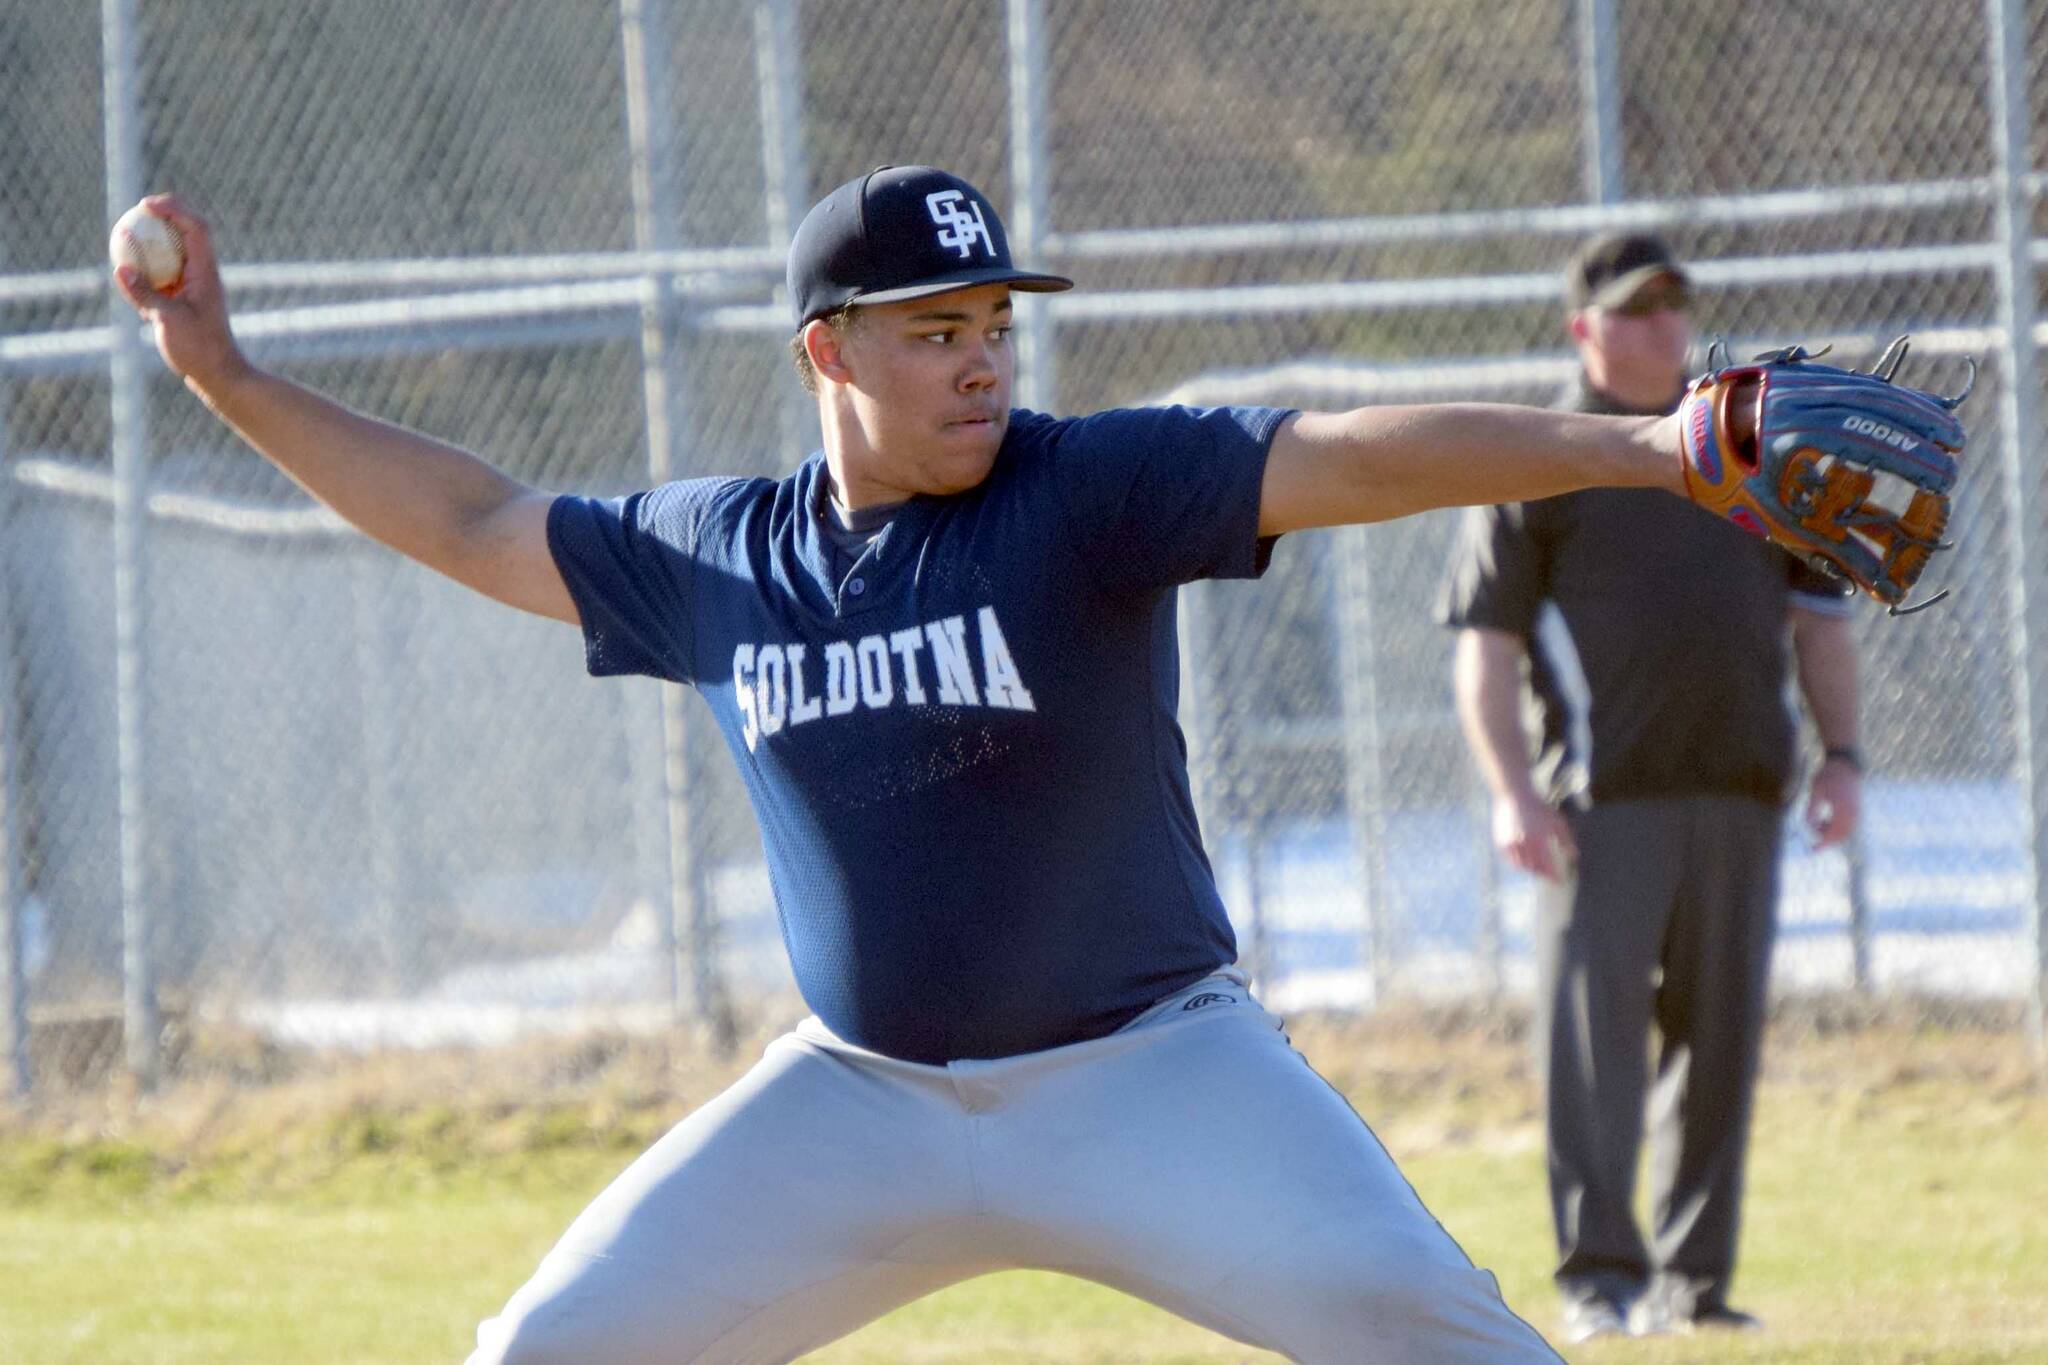 Soldotna starting pitcher Atticus Gibson delivers to Kenai Central on Tuesday, April 26, 2022, at the Kenai Little League Fields in Kenai, Alaska. (Photo by Jeff Helminiak/Peninsula Clarion)